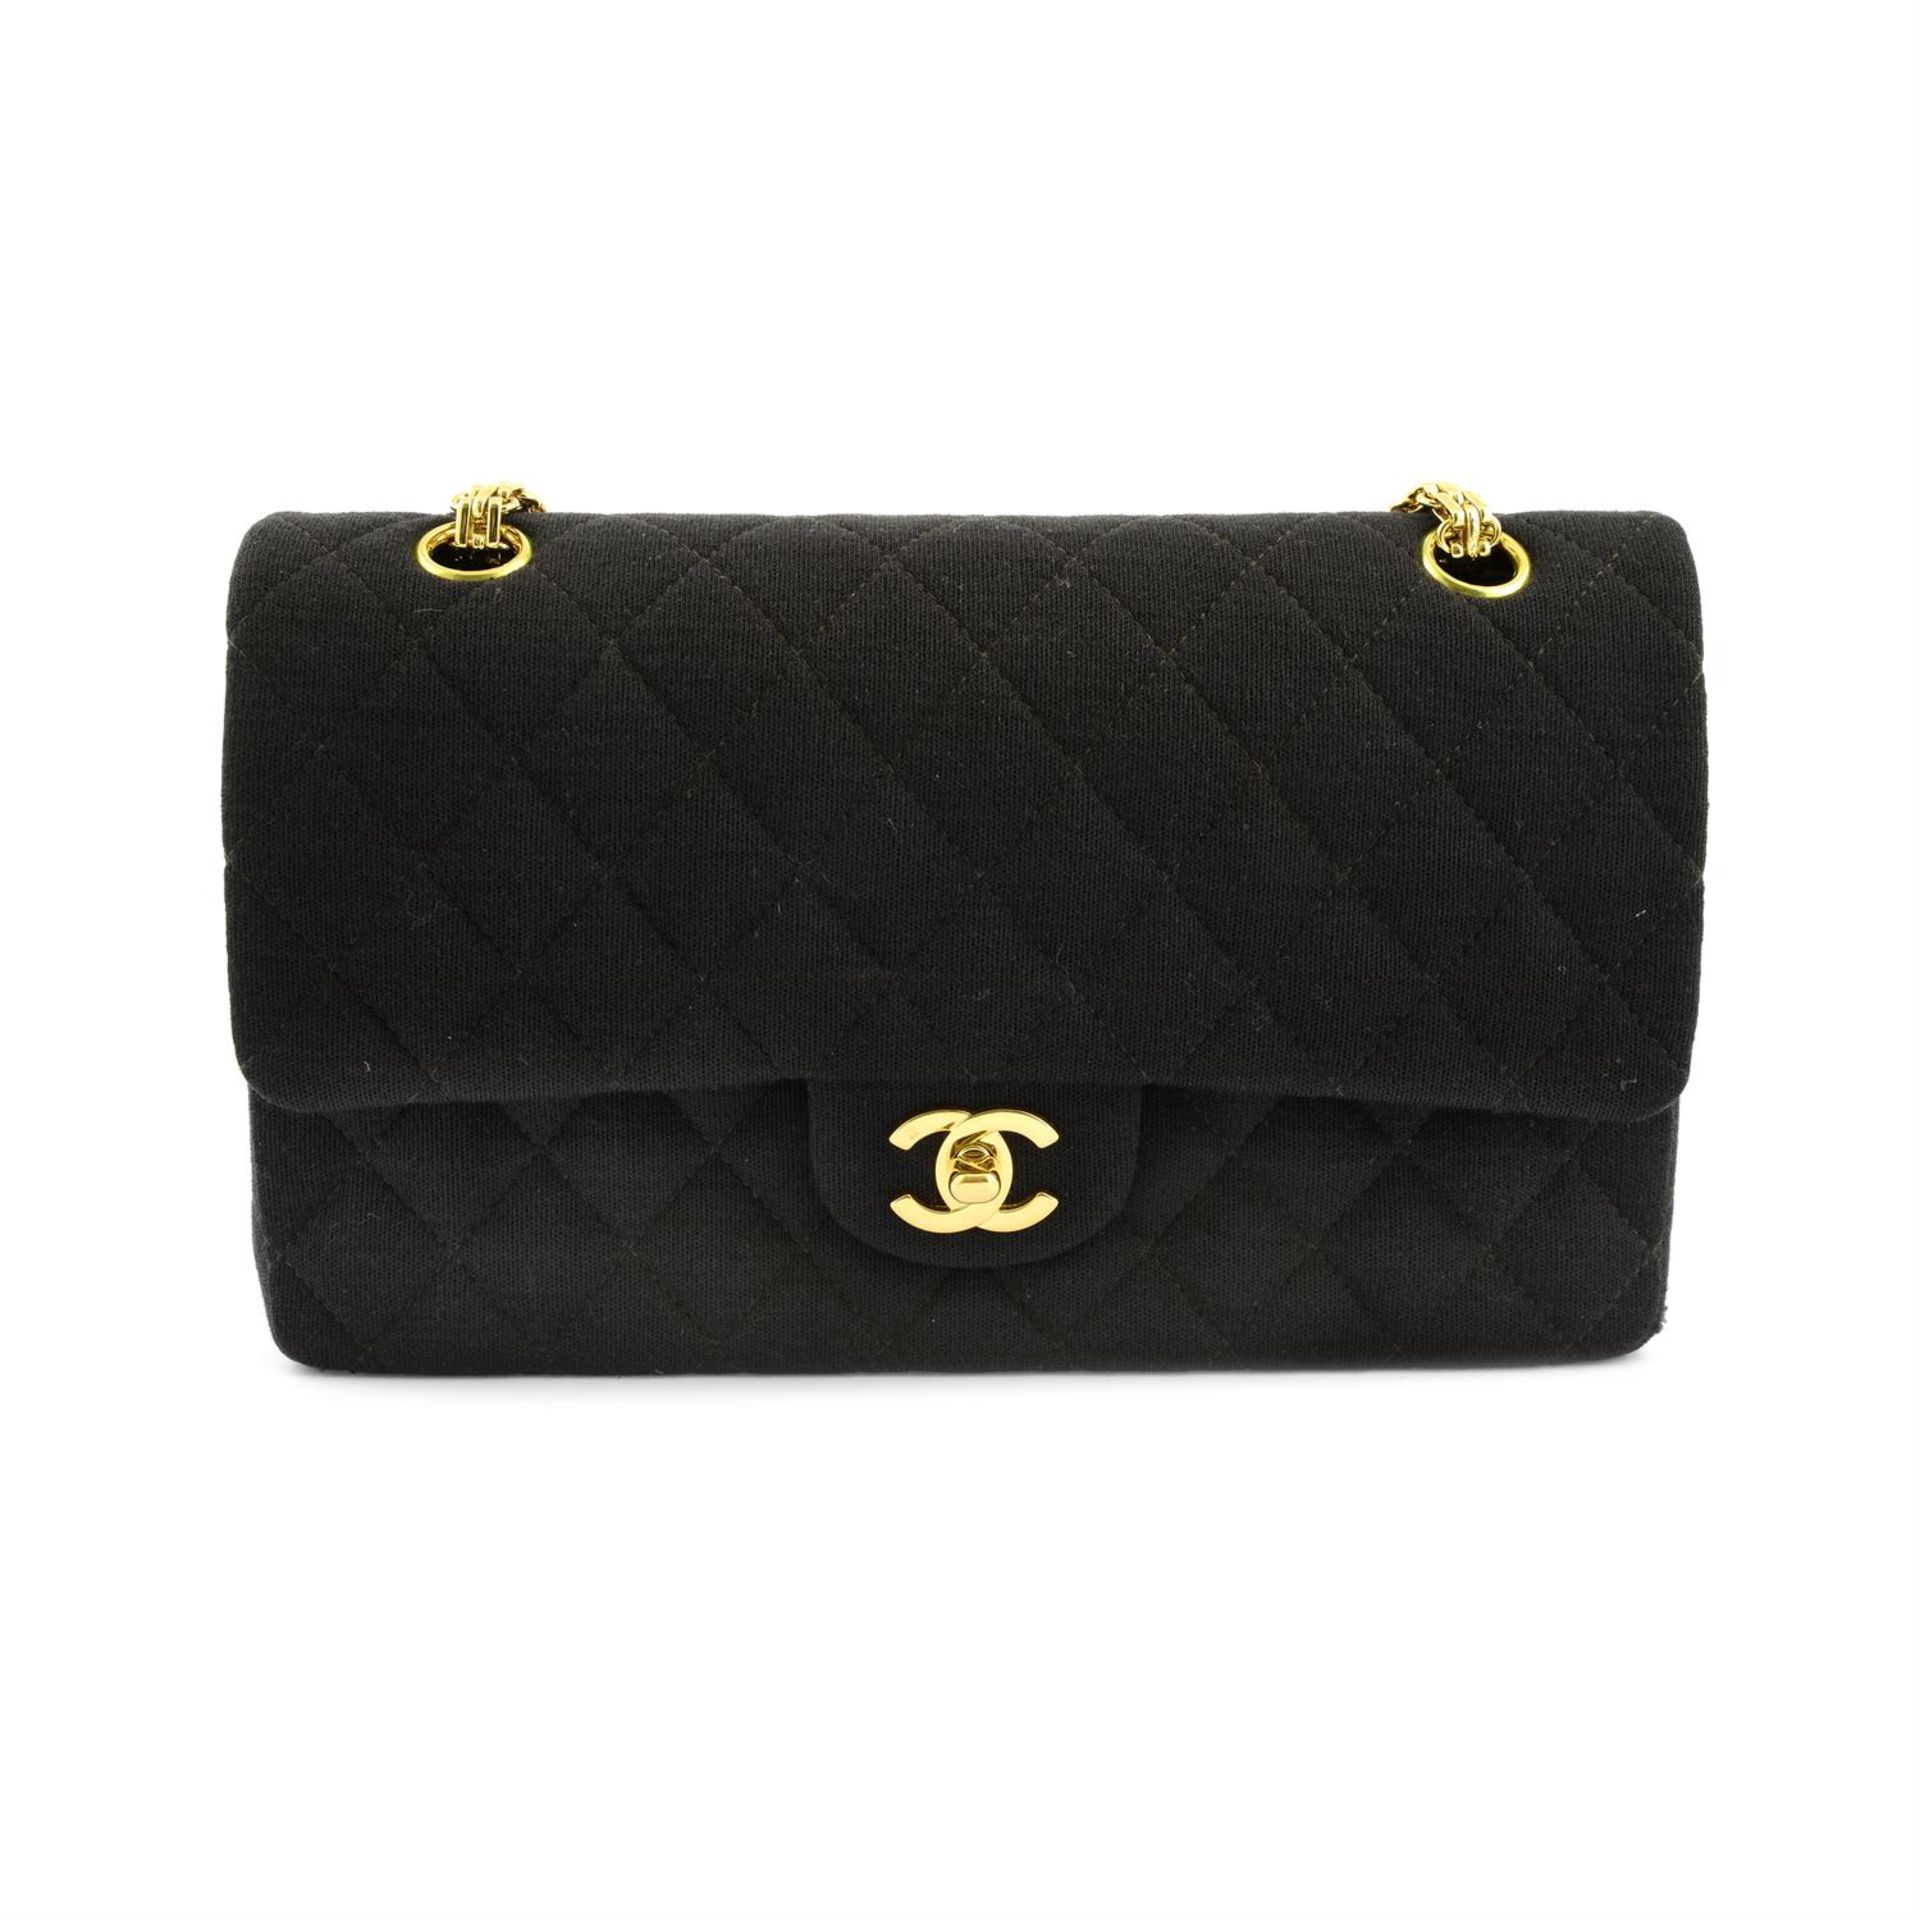 CHANEL - a Jersey fabric double flap handbag.